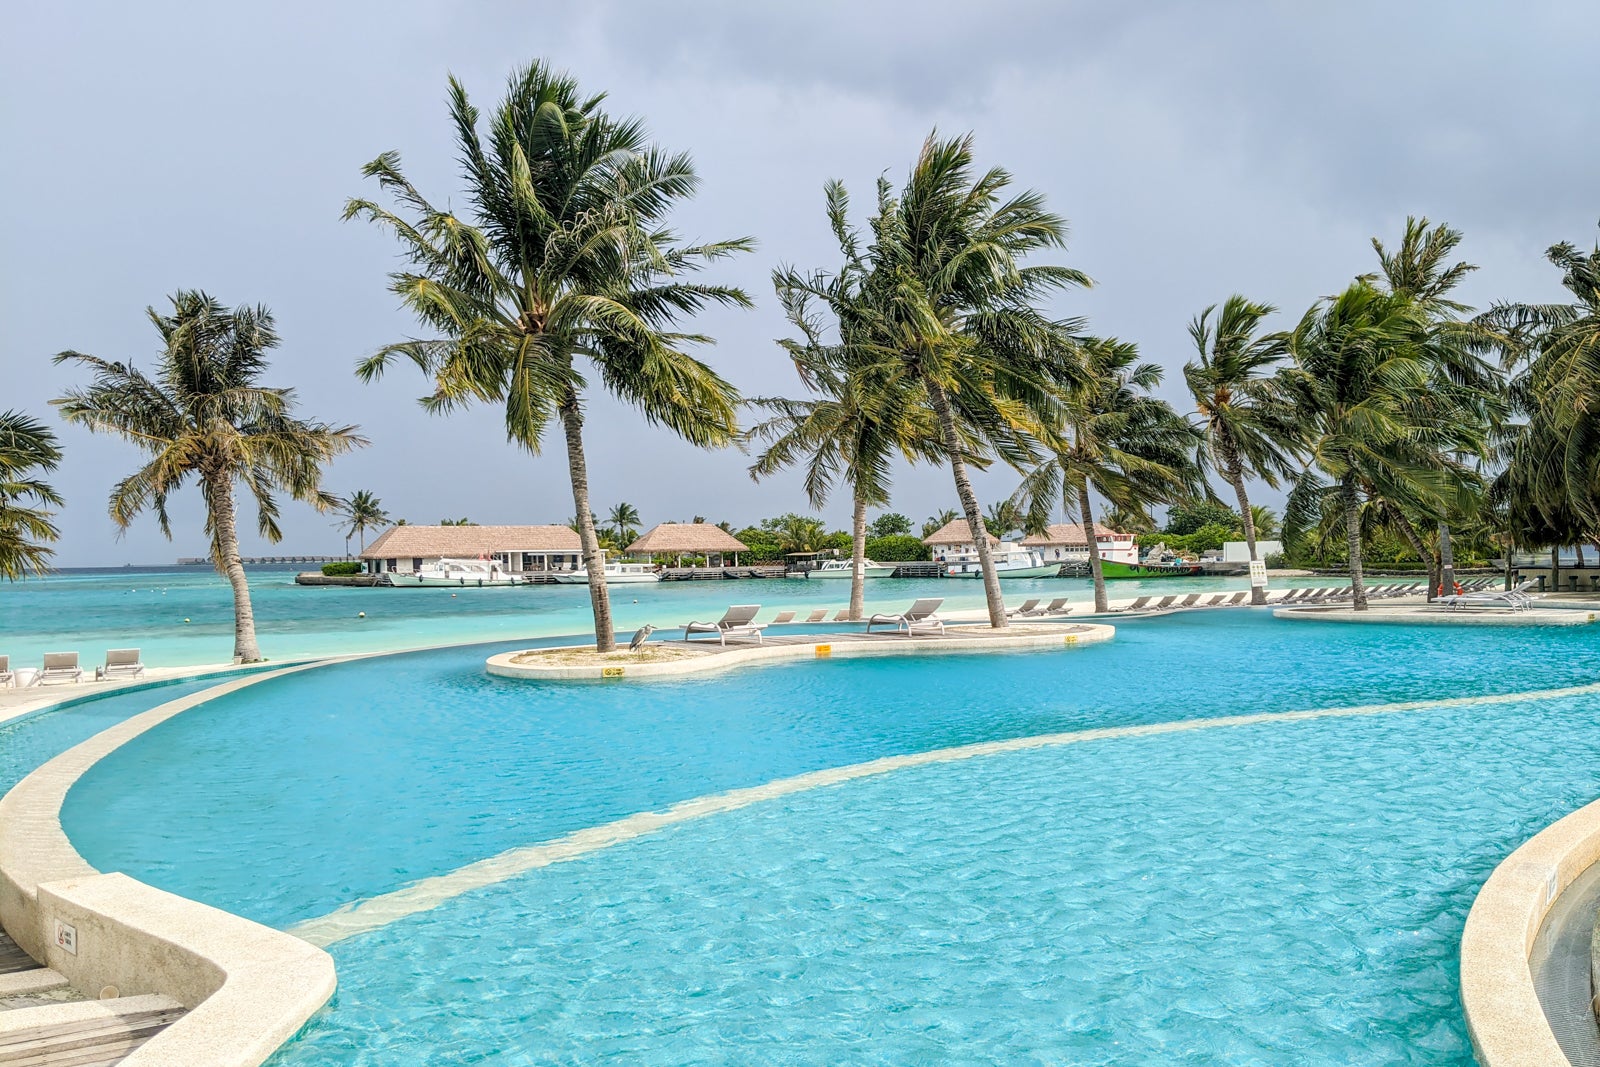 IHG's Holiday Inn Resort Kandooma Maldives